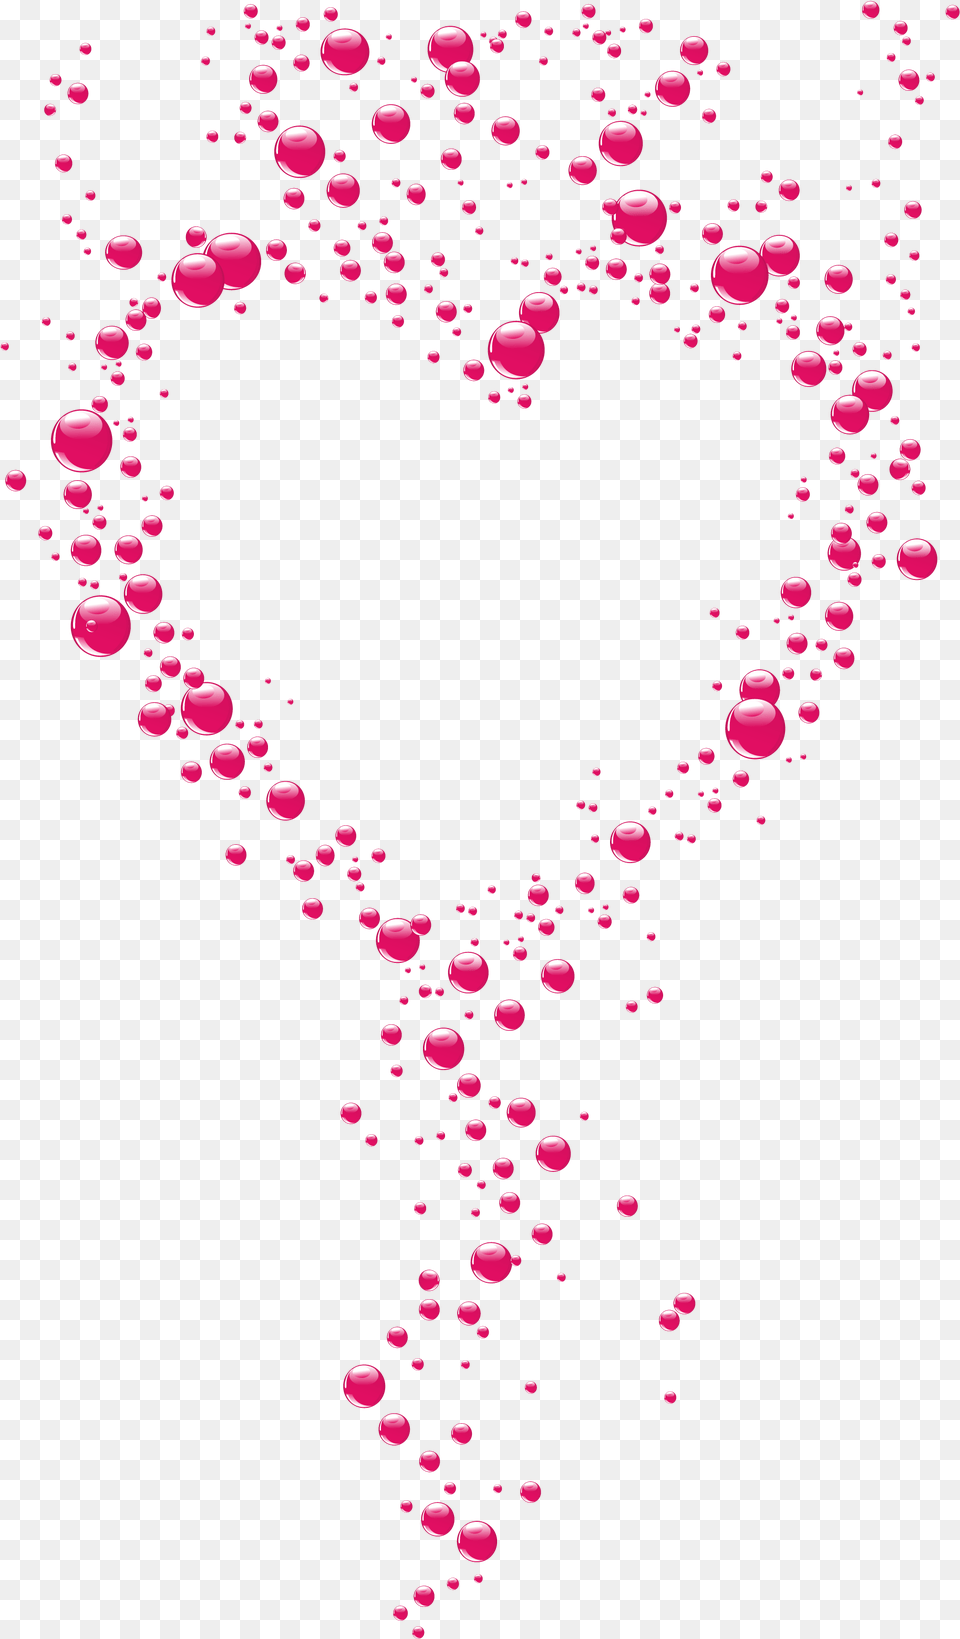 Svg Transparent Heart Bubbles Clipart Heart Bubbles Clip Art Free Png Download